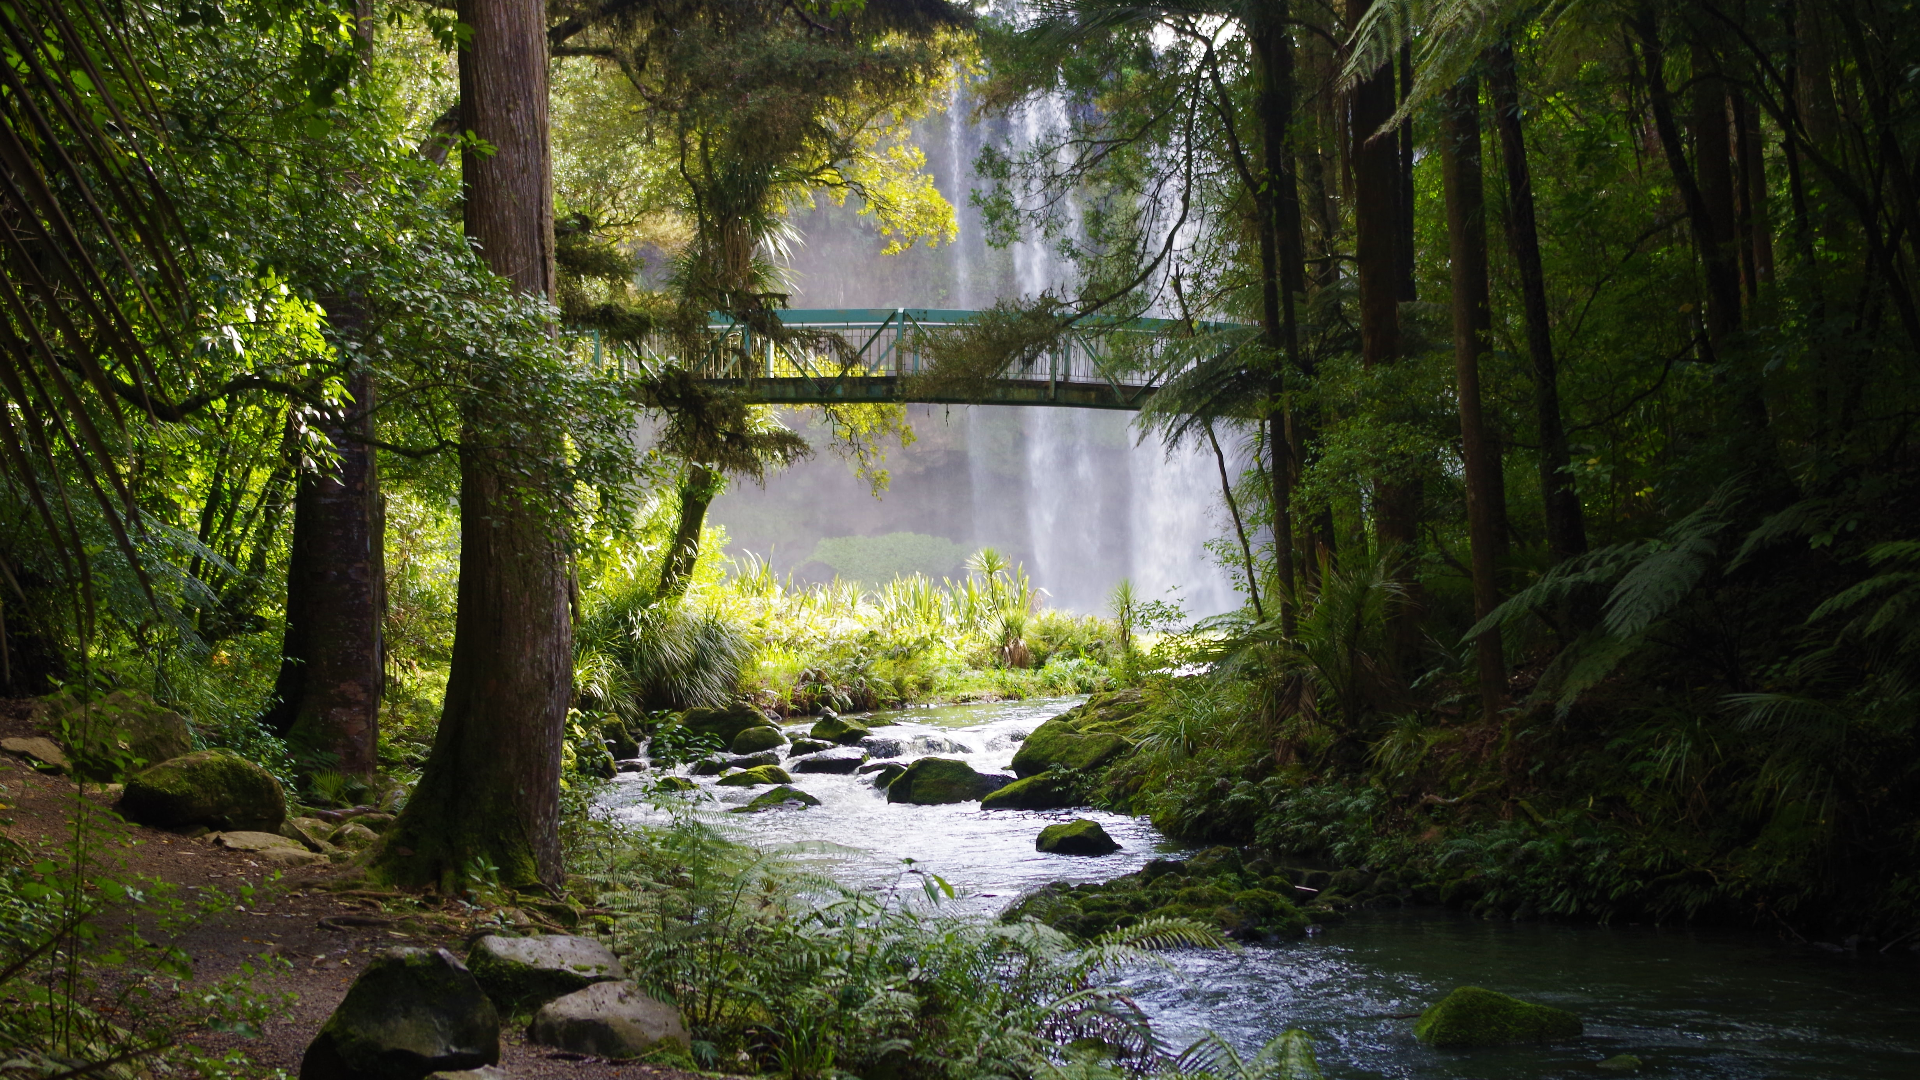 General 1920x1080 nature trees plants grass bridge rocks moss leaves waterfall spring New Zealand river